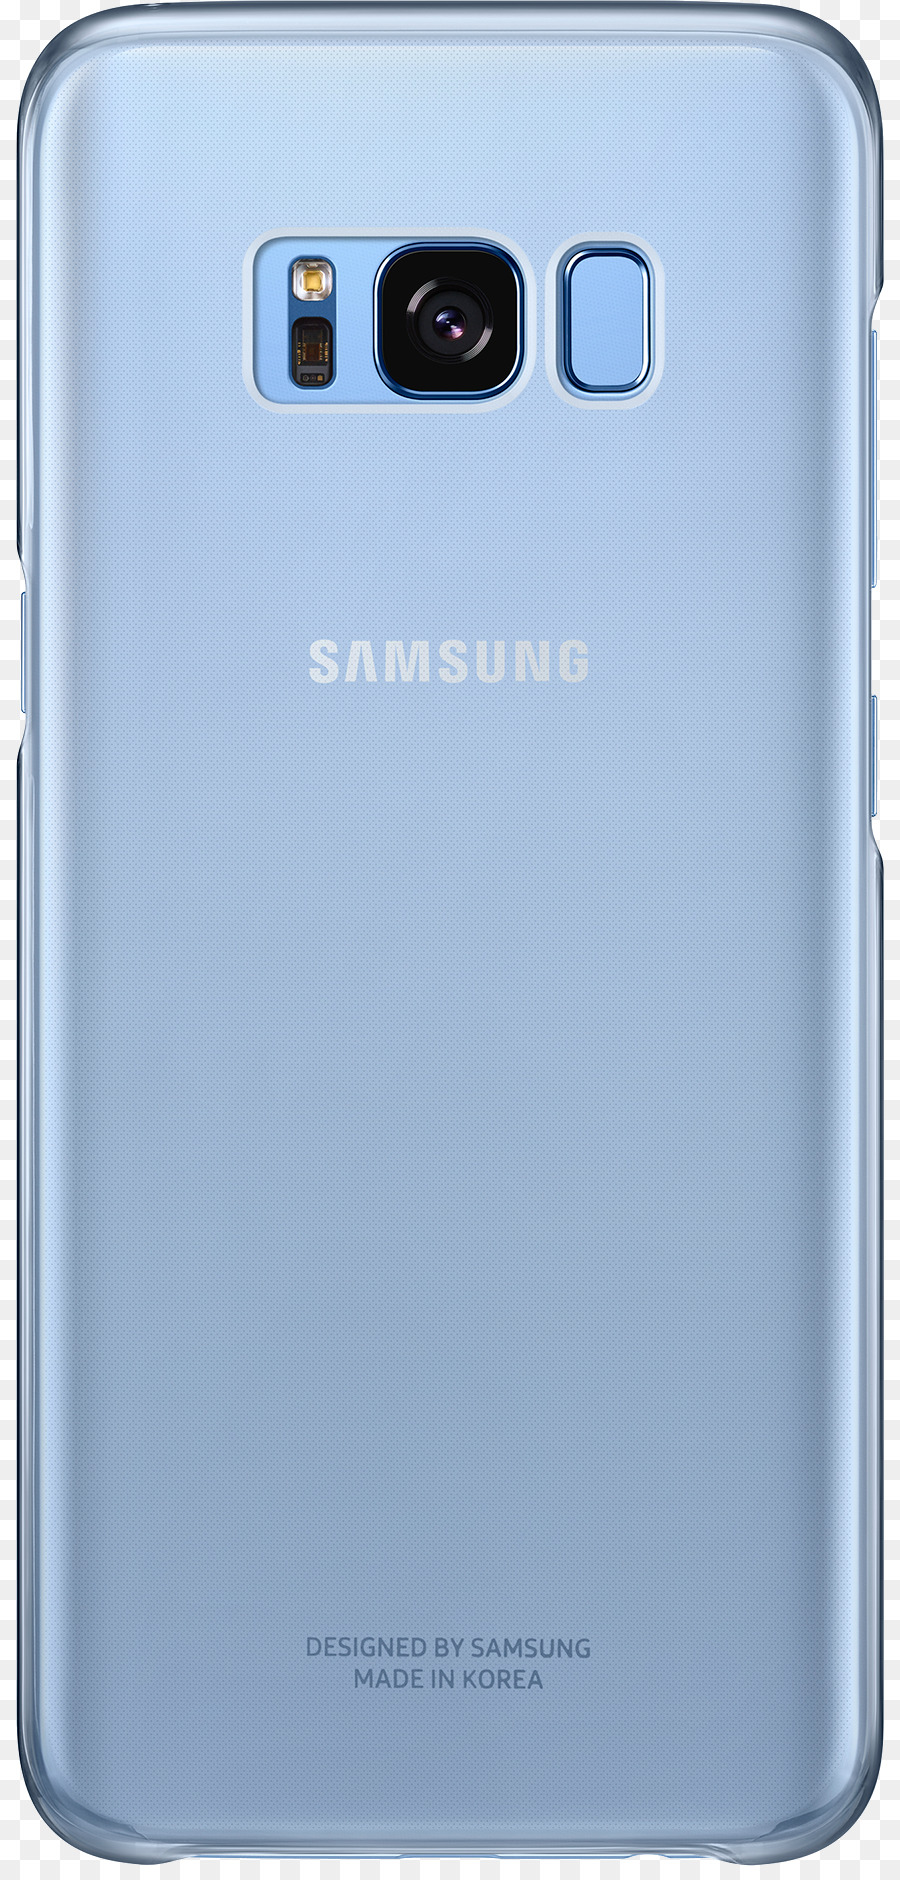 Samsung Galaxy S7 Telefon Smartphone blau - Samsung